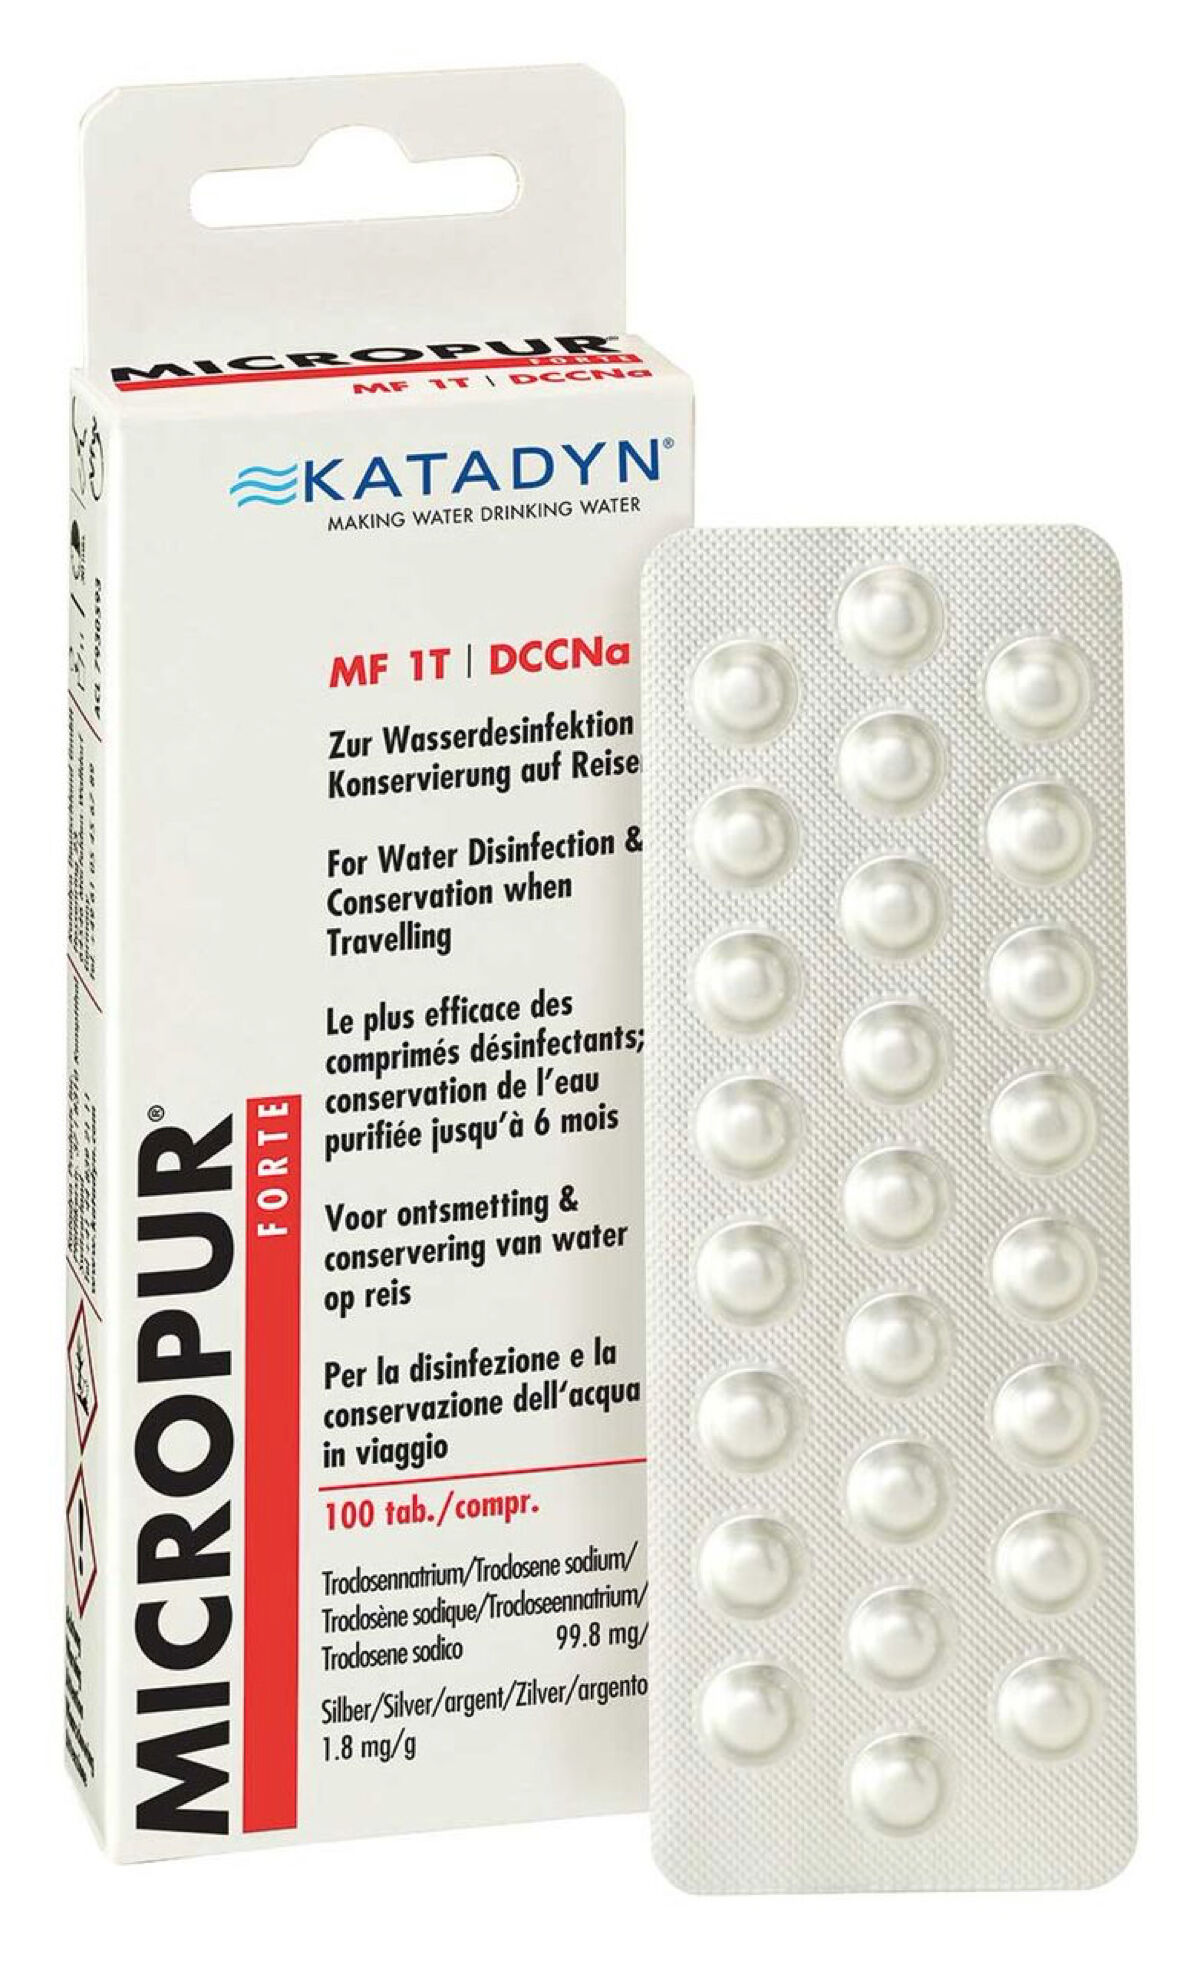 Katadyn Micropur Forte MT1 DCCNa - Wasserdesinfektion